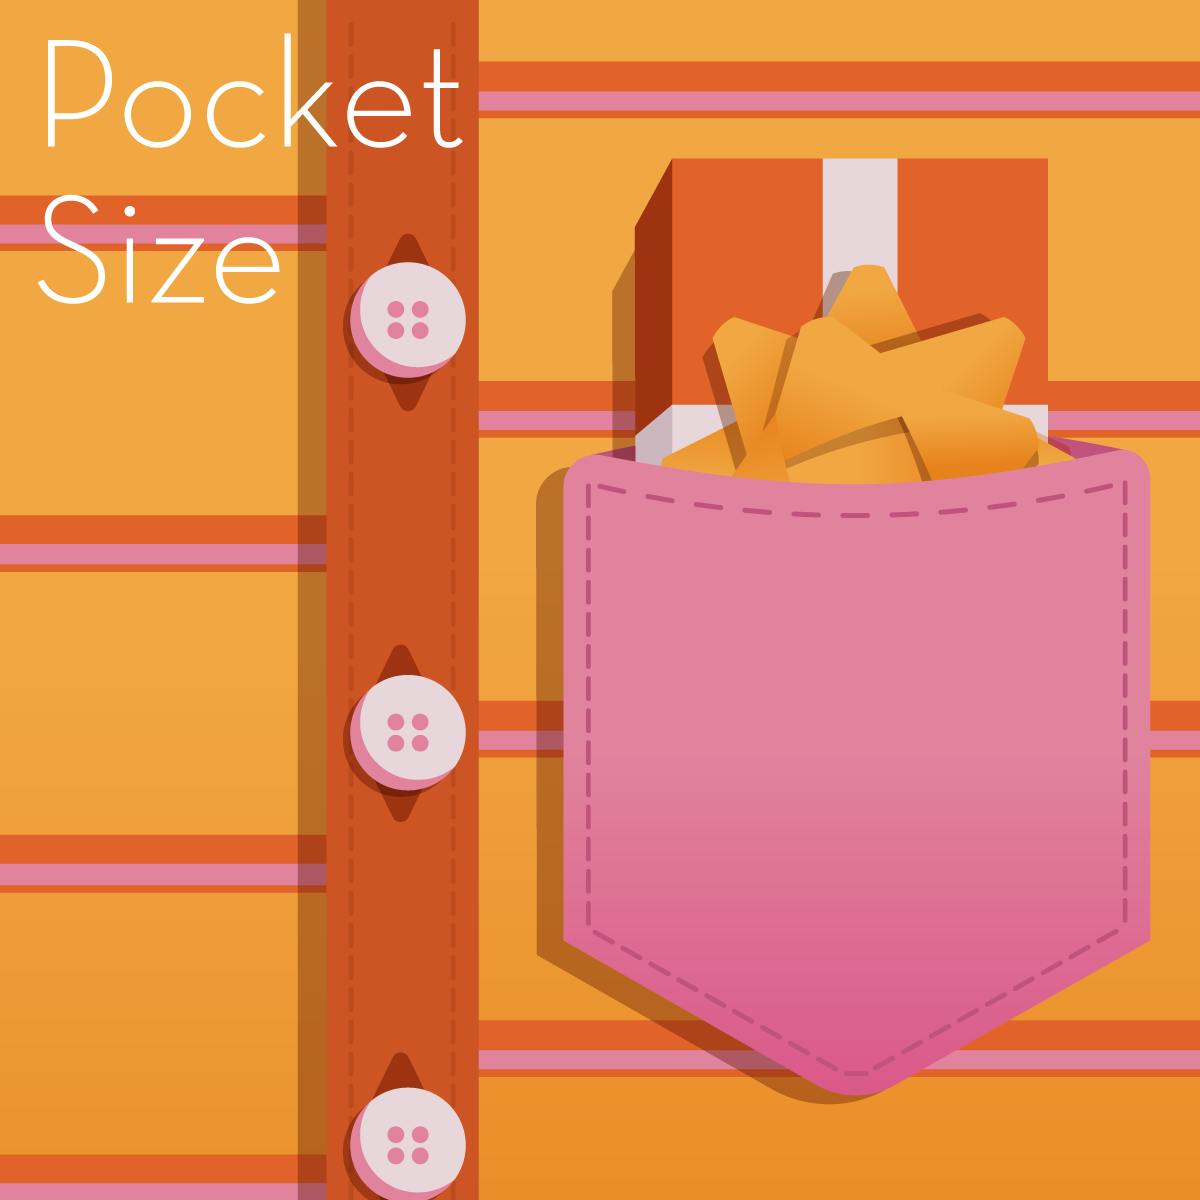 Pocket-Sized Presents for Mr. Practical